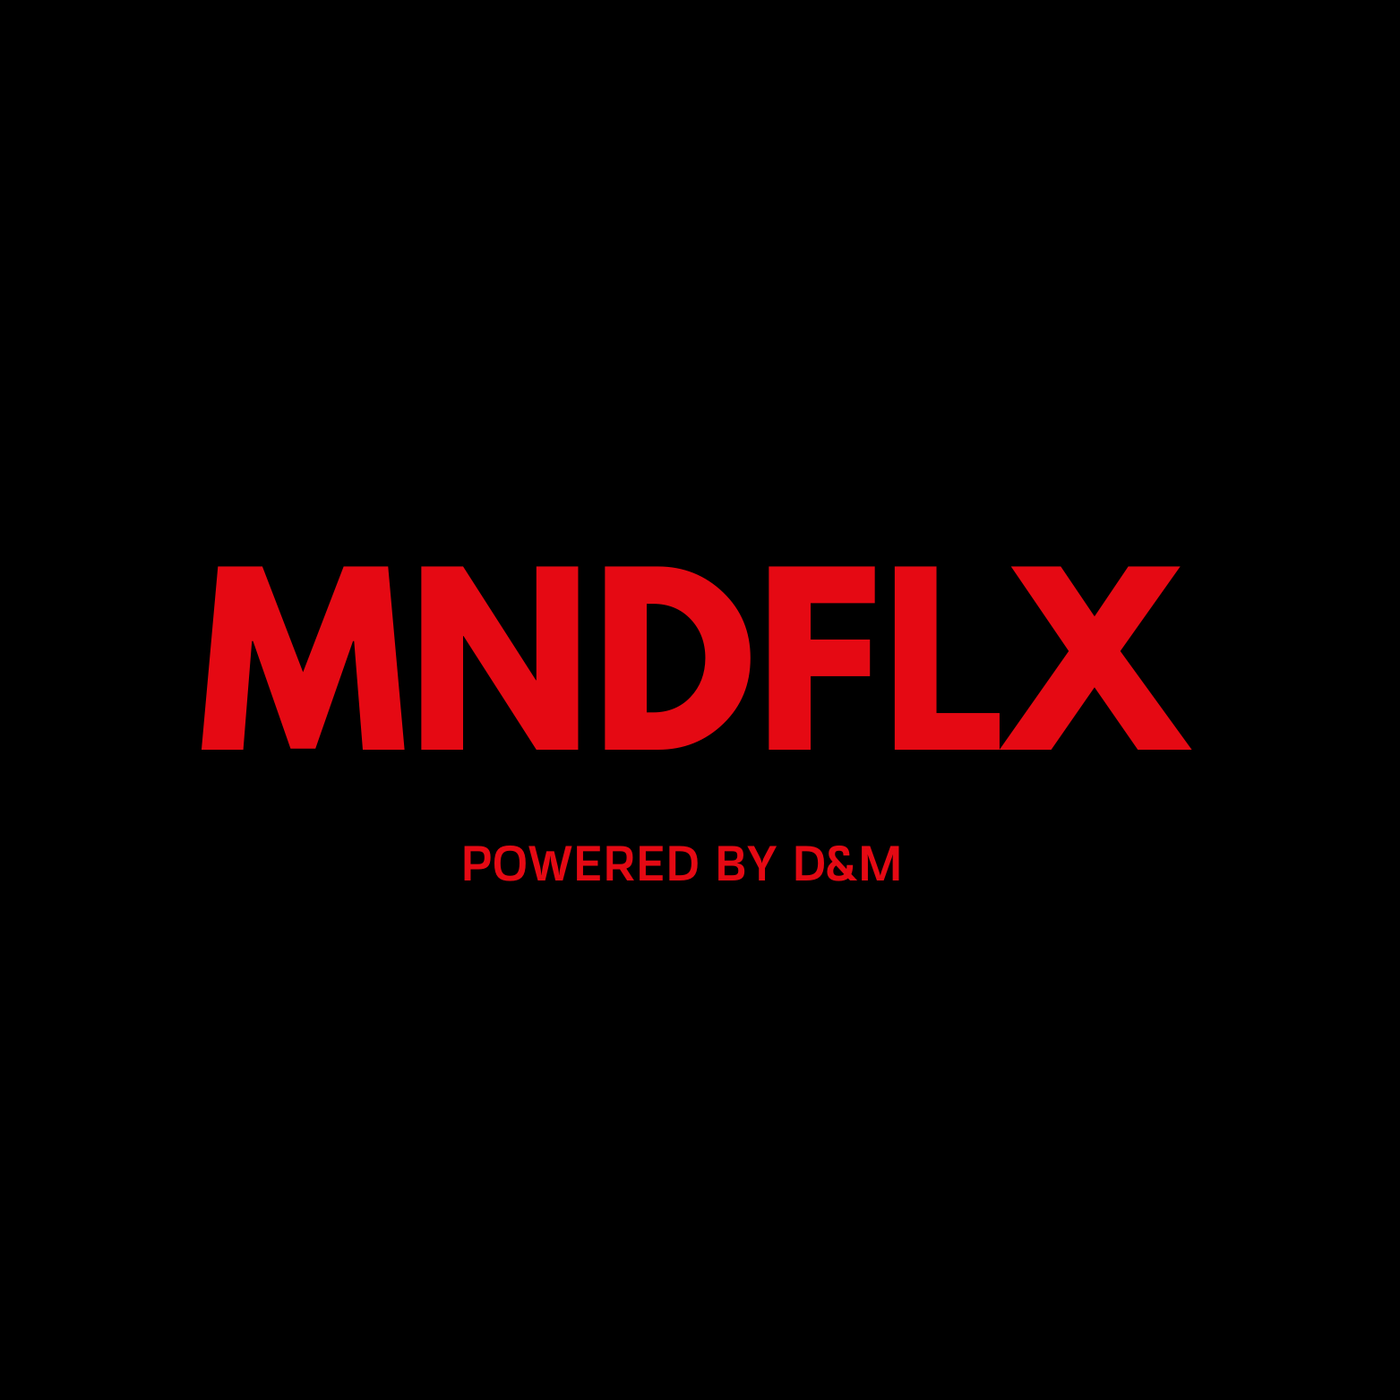 MNDFLX